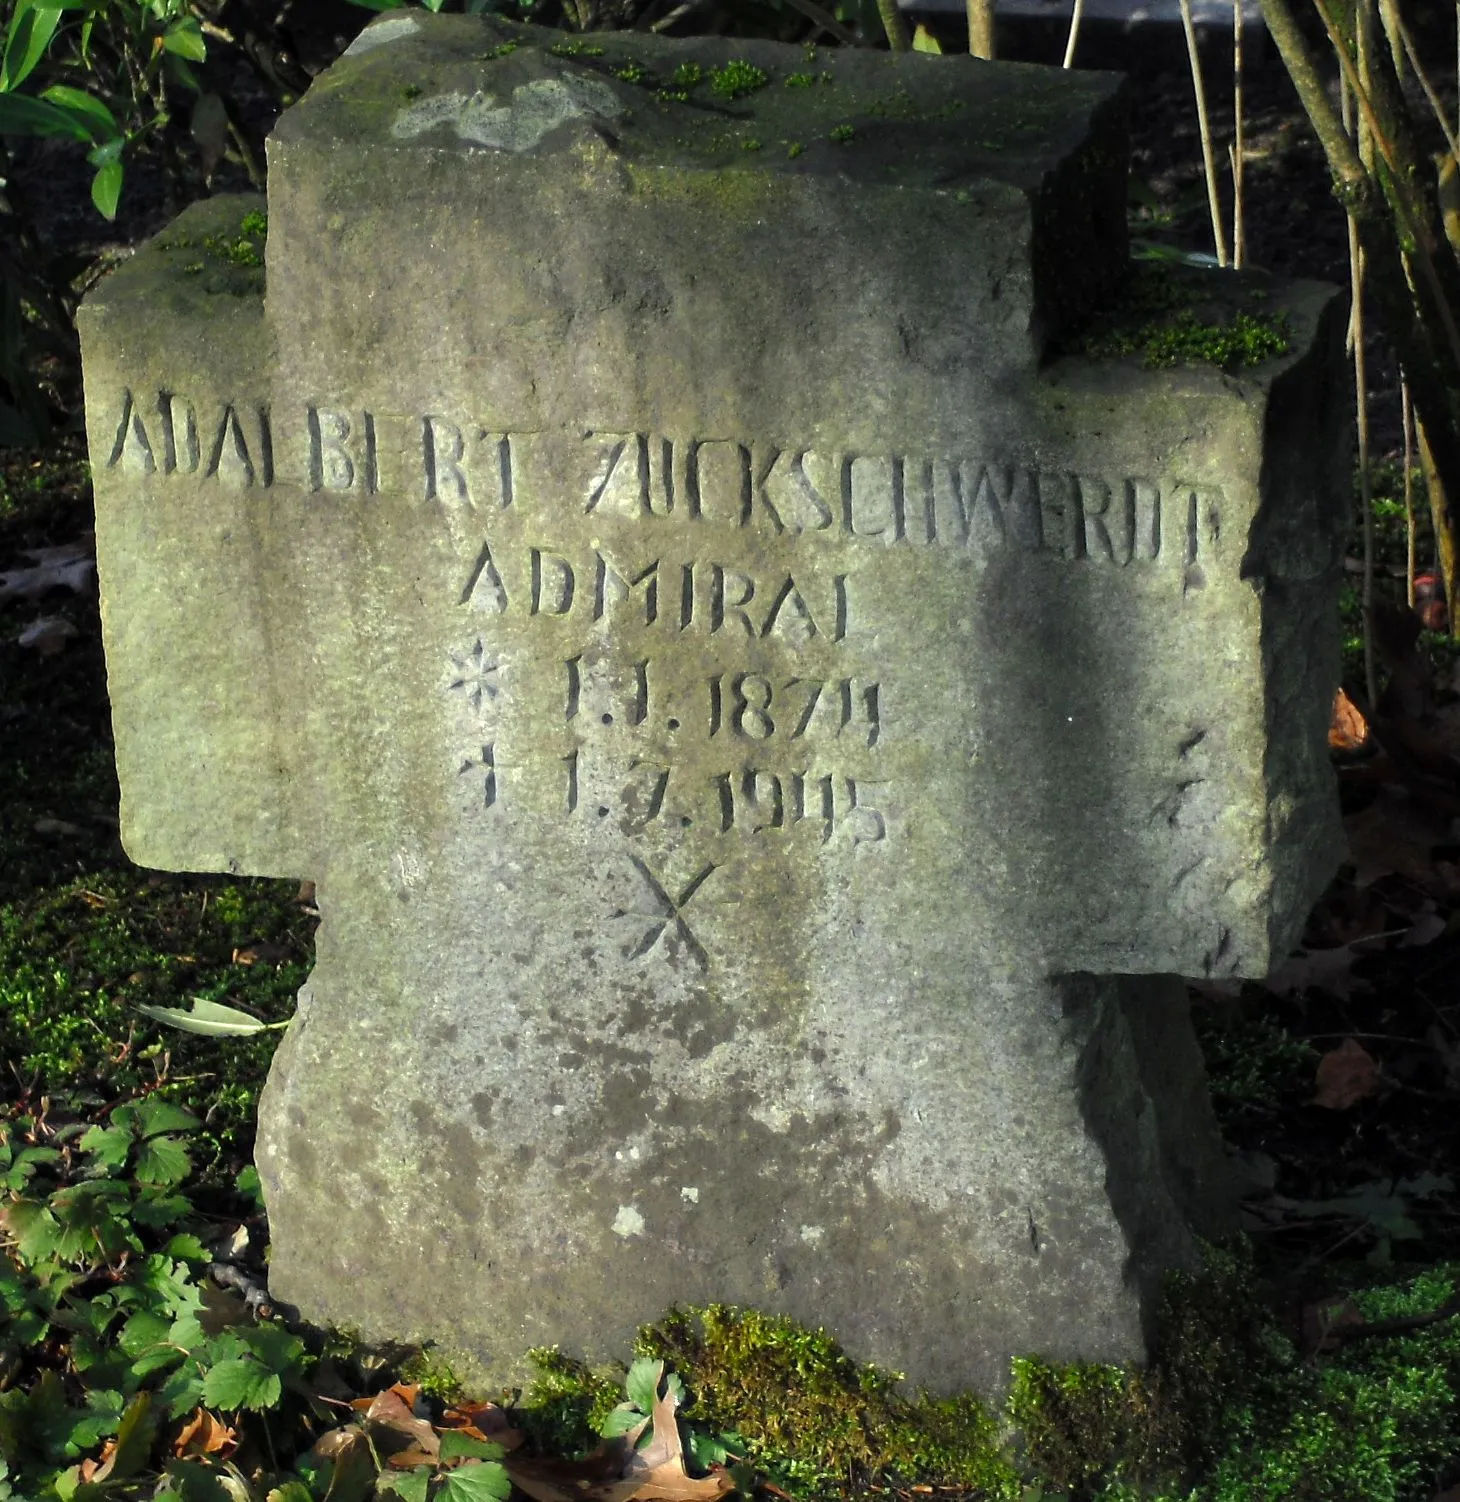 Photo showing: Adalbert Zuckschwerdt's grave in Hövelhof